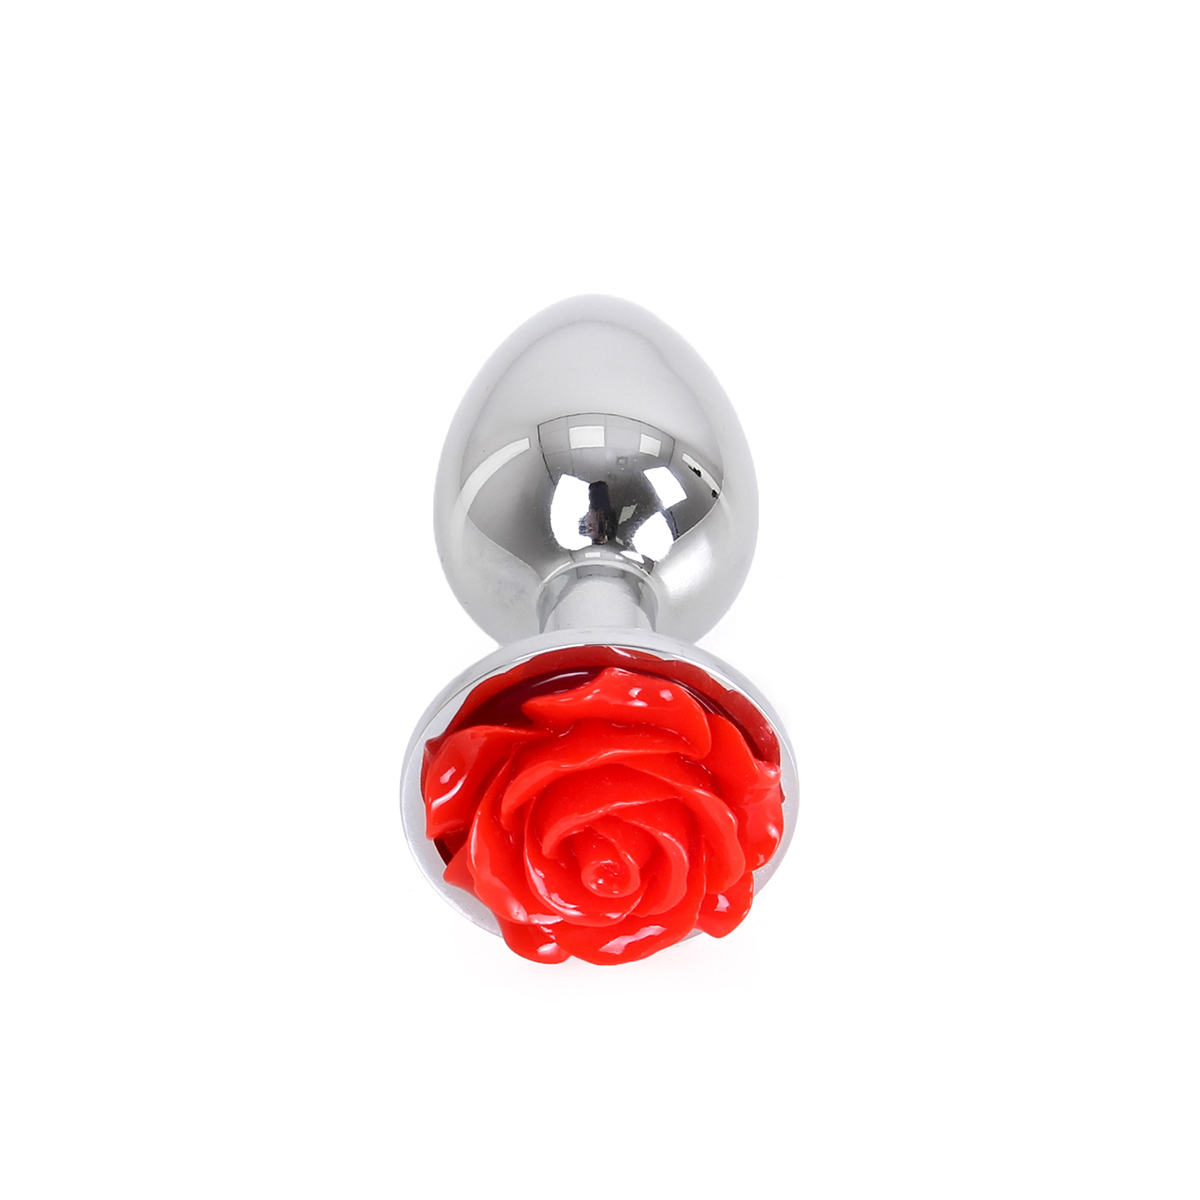 Aluminium-Buttplug-Red-Rose-OPR-2820038-4